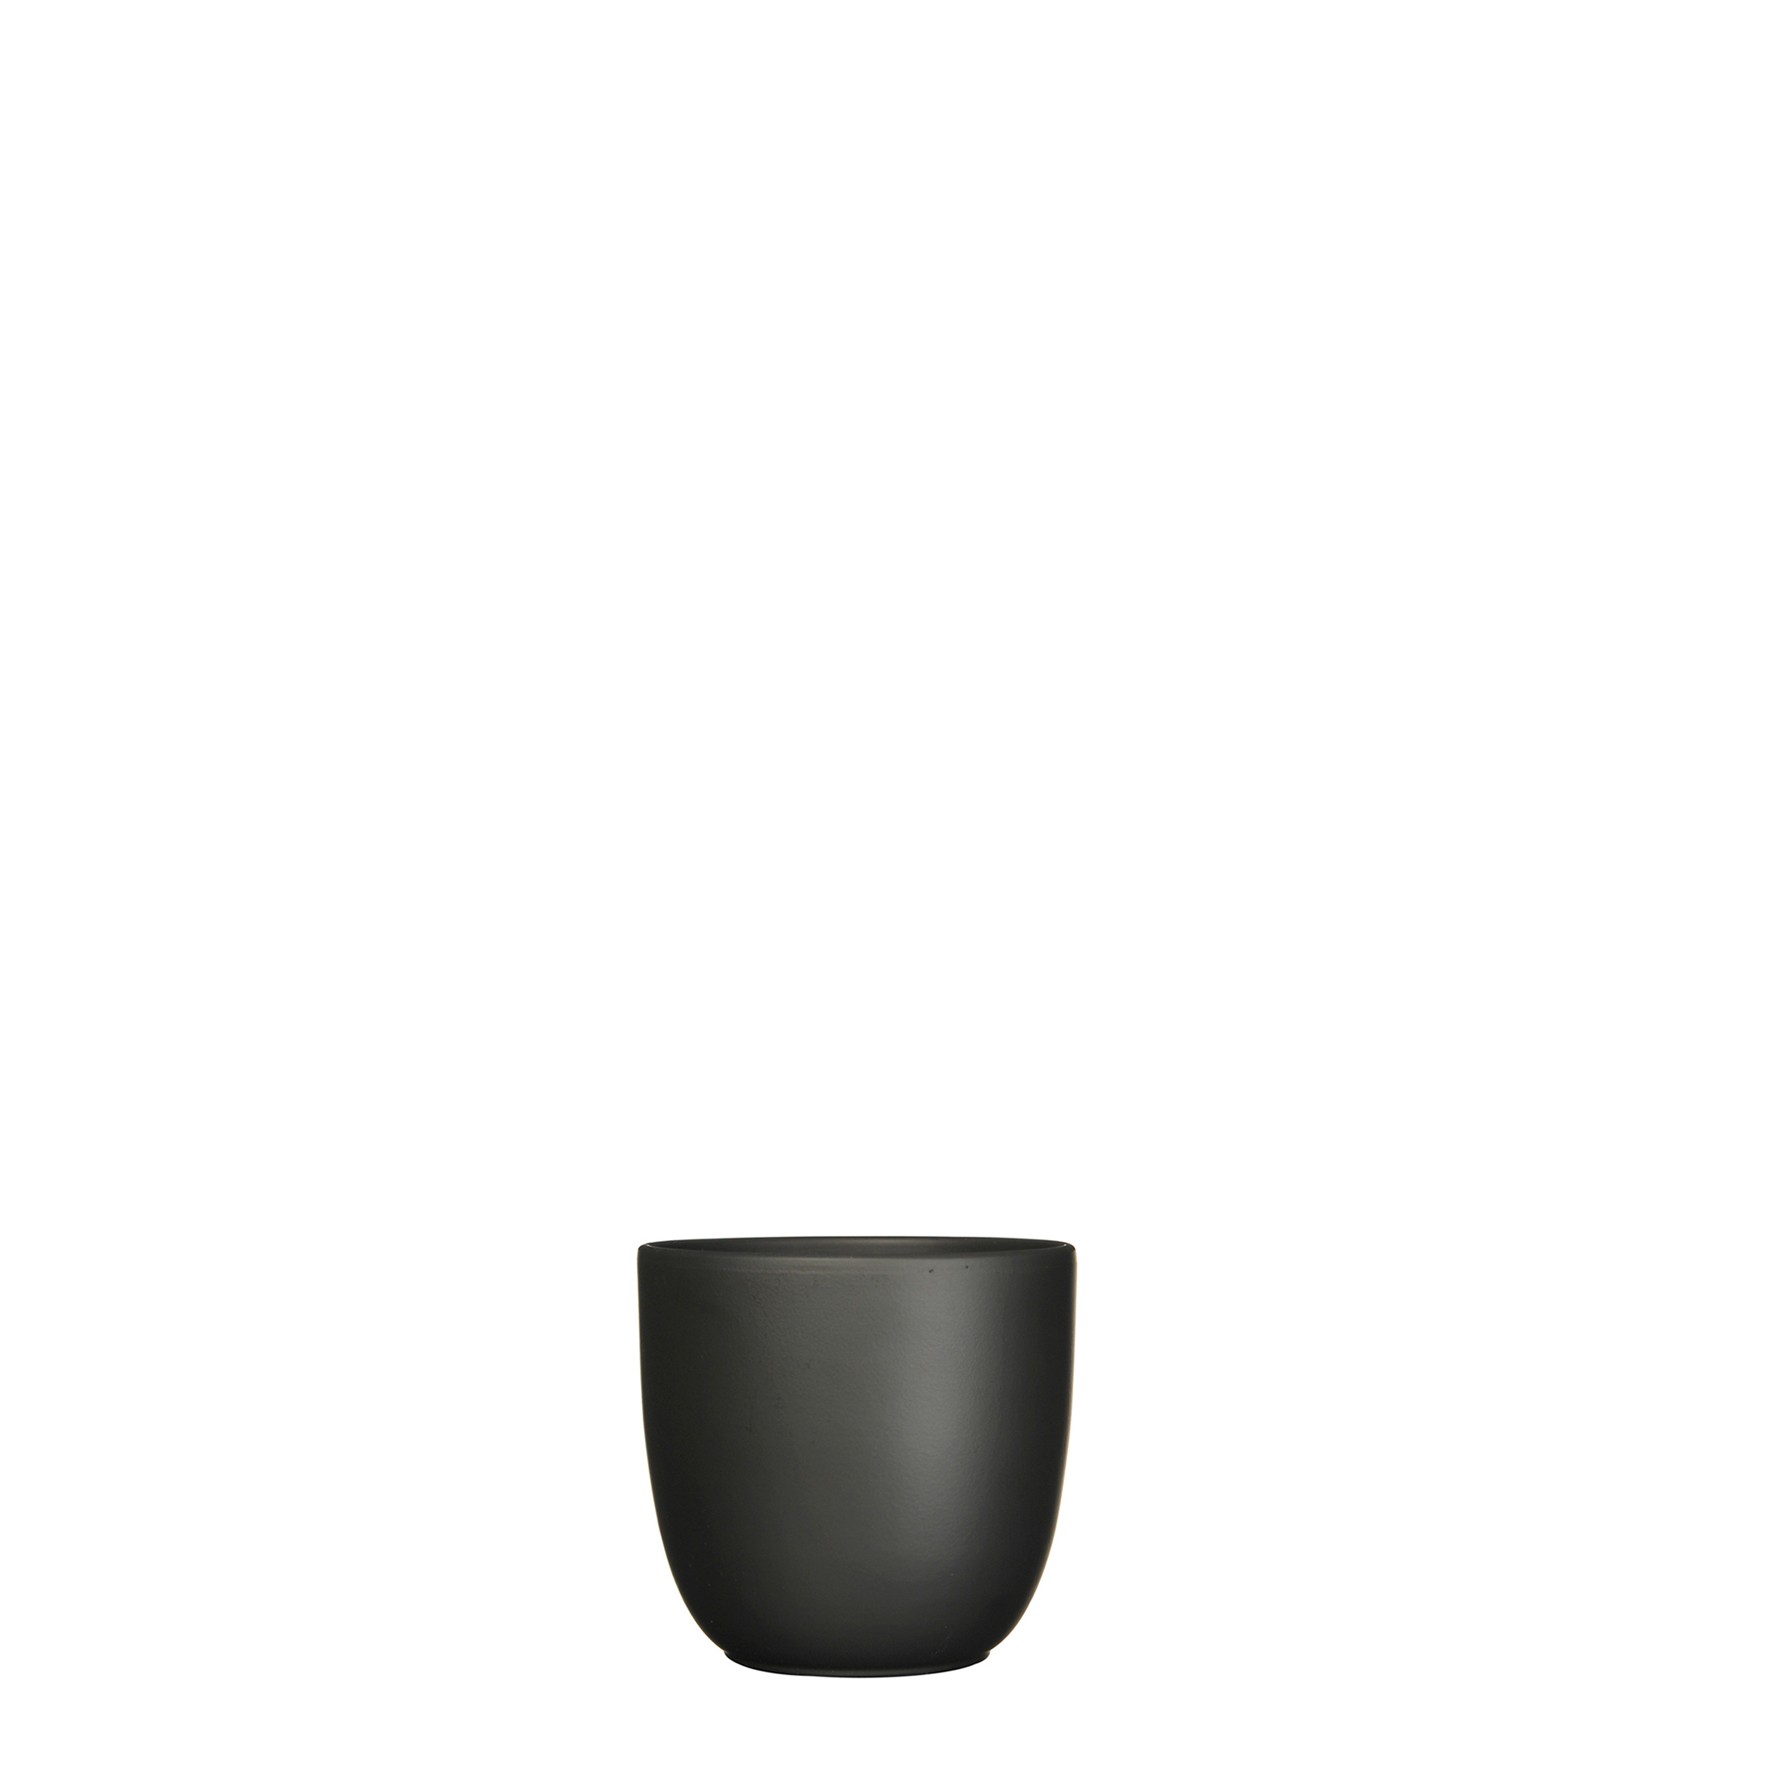 Bloempot Pot rond es/9 tusca 9 x 10 cm zwart mat Mica - Mica Decorations